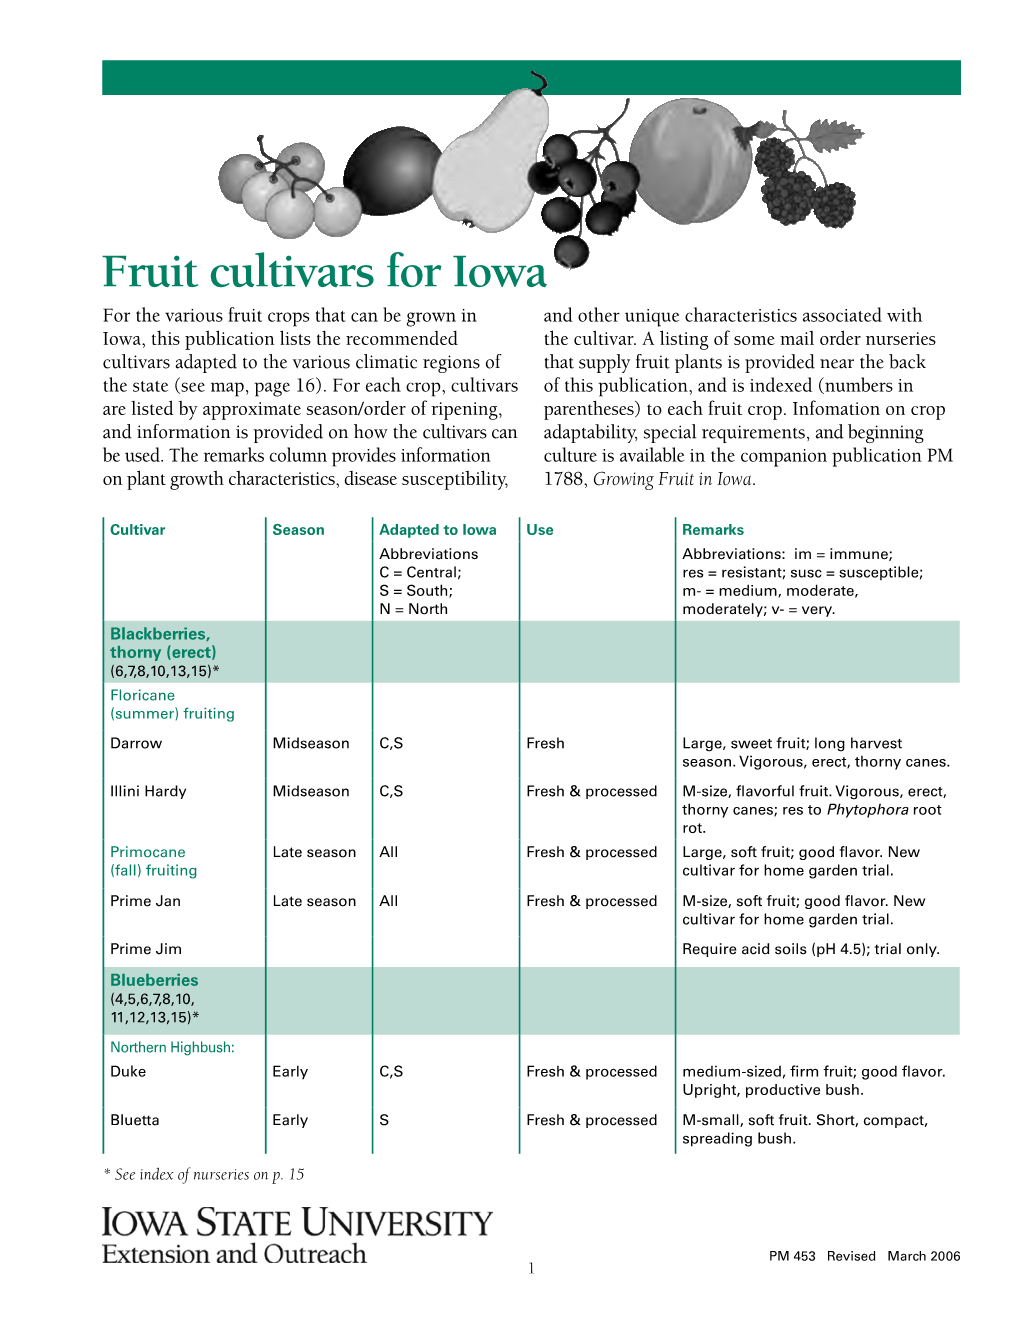 Fruit Cultivars for Iowa